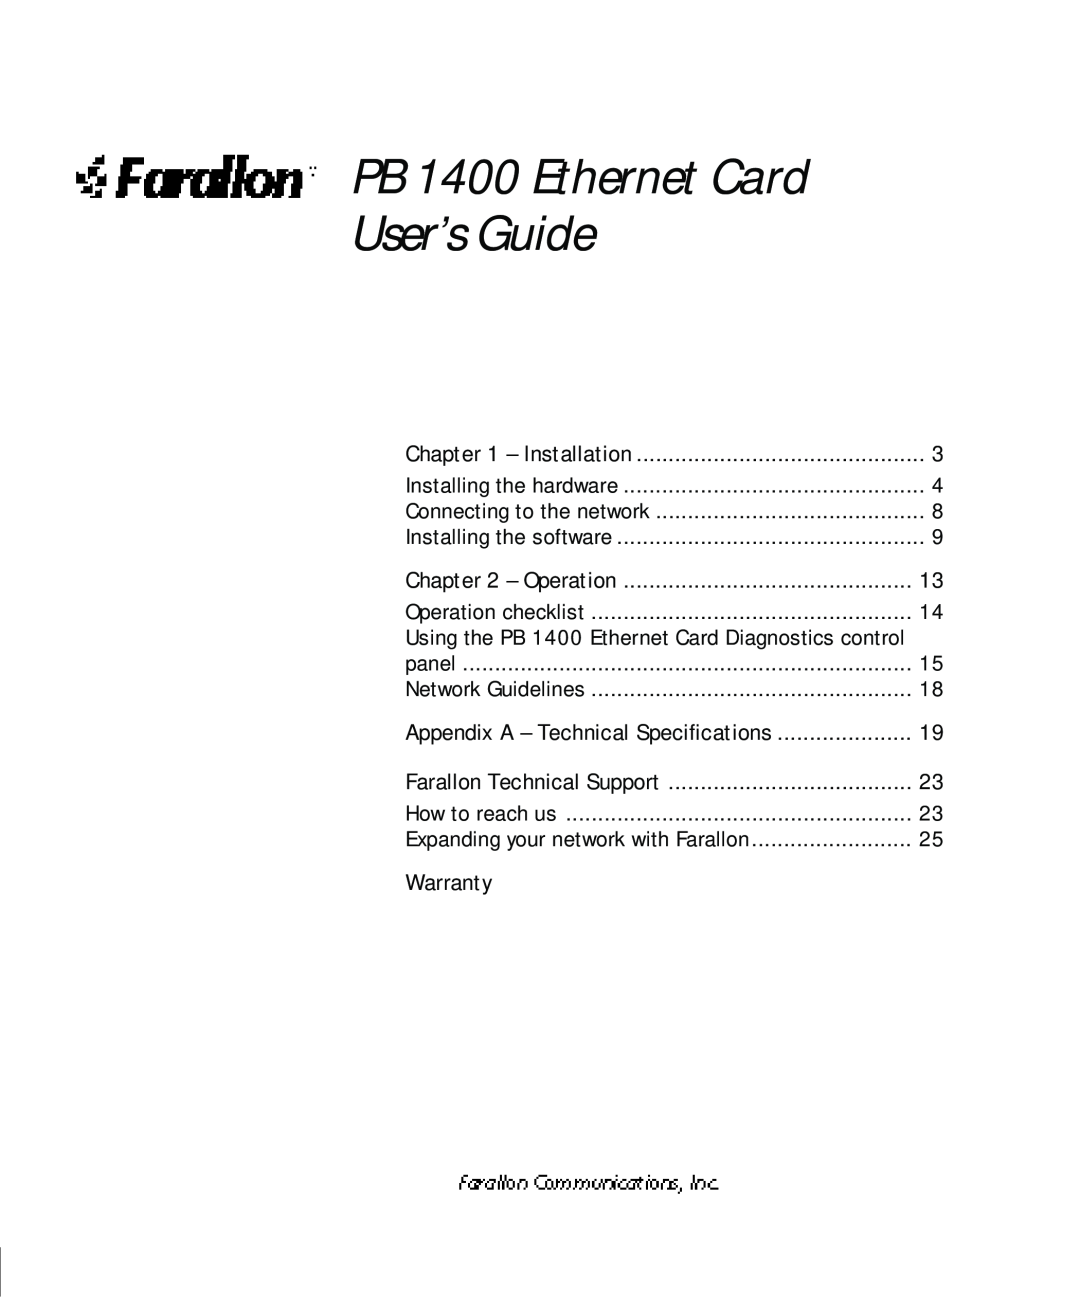 Farallon Communications appendix PB 1400 Ethernet Card User’s Guide 